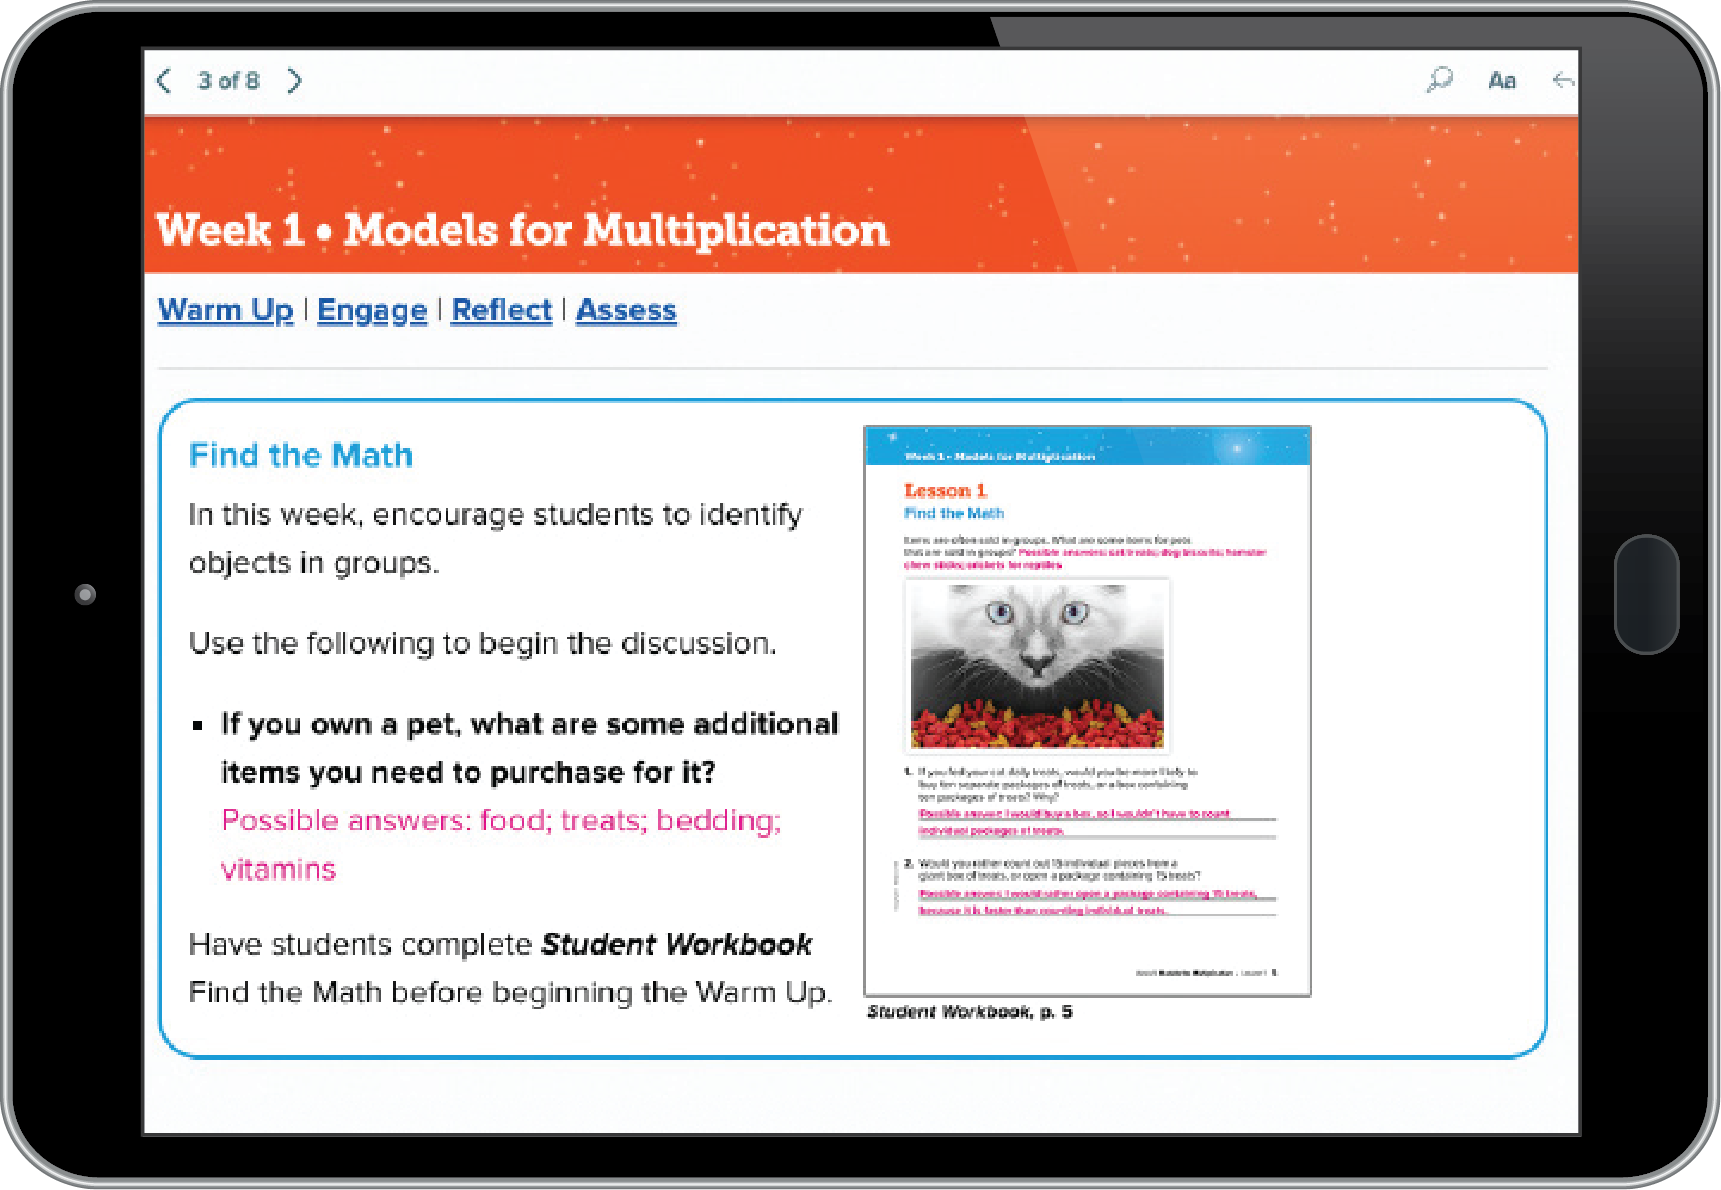 Number Worlds Teacher ebook example on tablet:  Week 1, Models for Multiplication